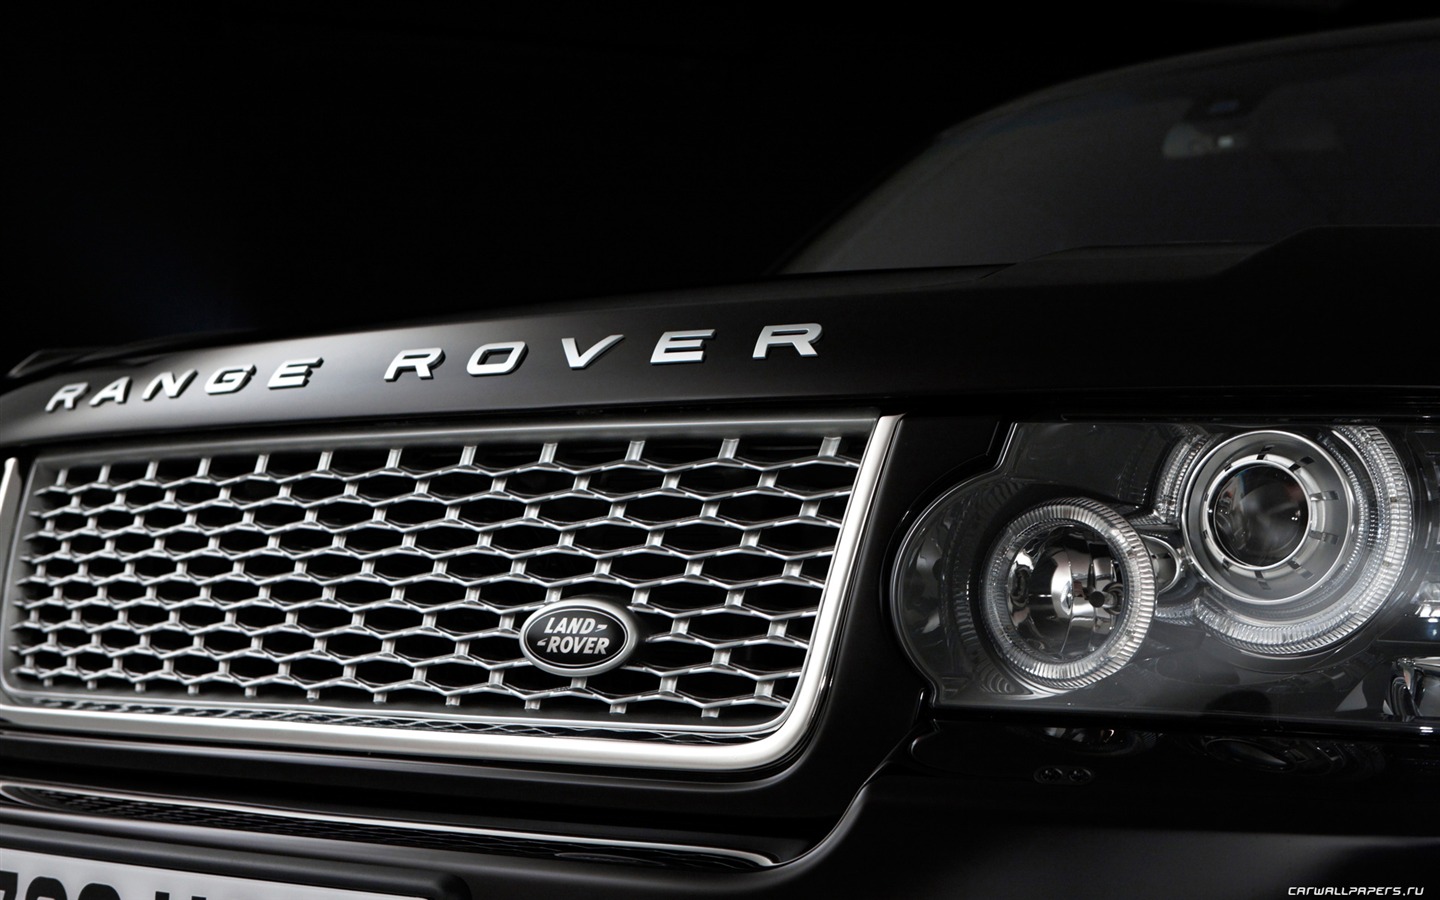 Land Rover Range Rover Black Edition - 2011 路虎21 - 1440x900